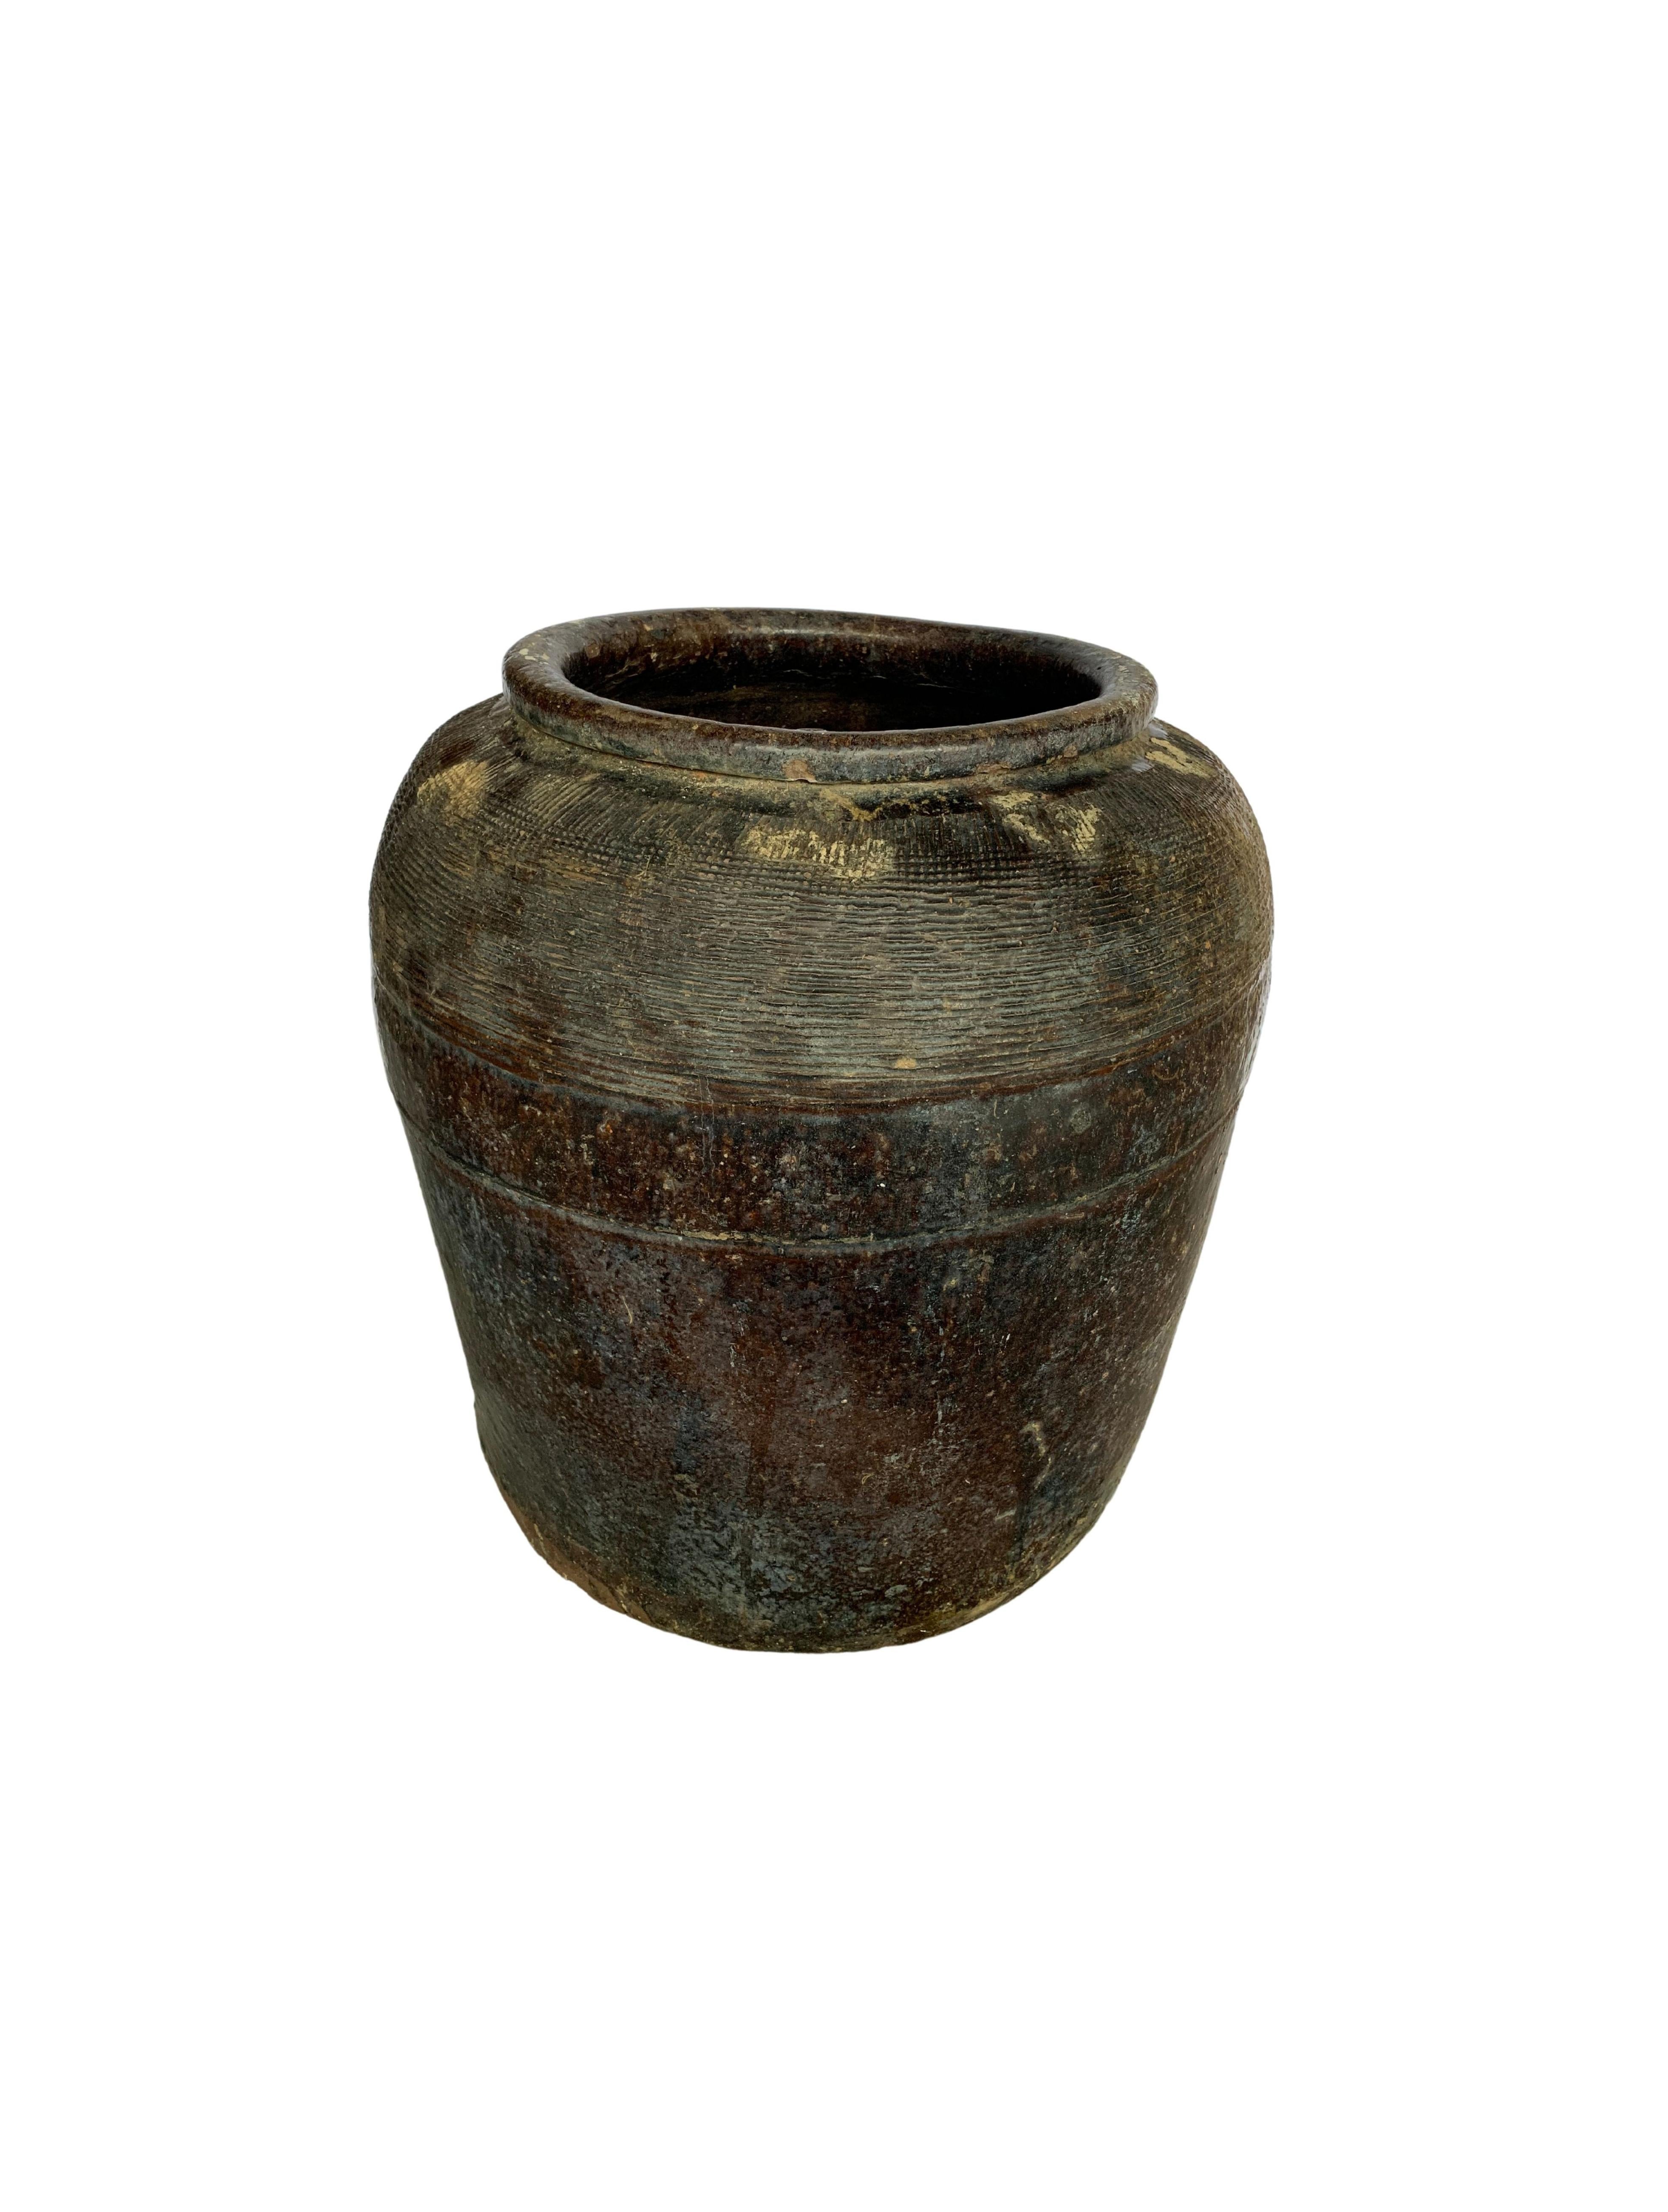 Qing Antique Chinese Brown Glazed Ceramic Salty Egg Jar, c.1900 For Sale